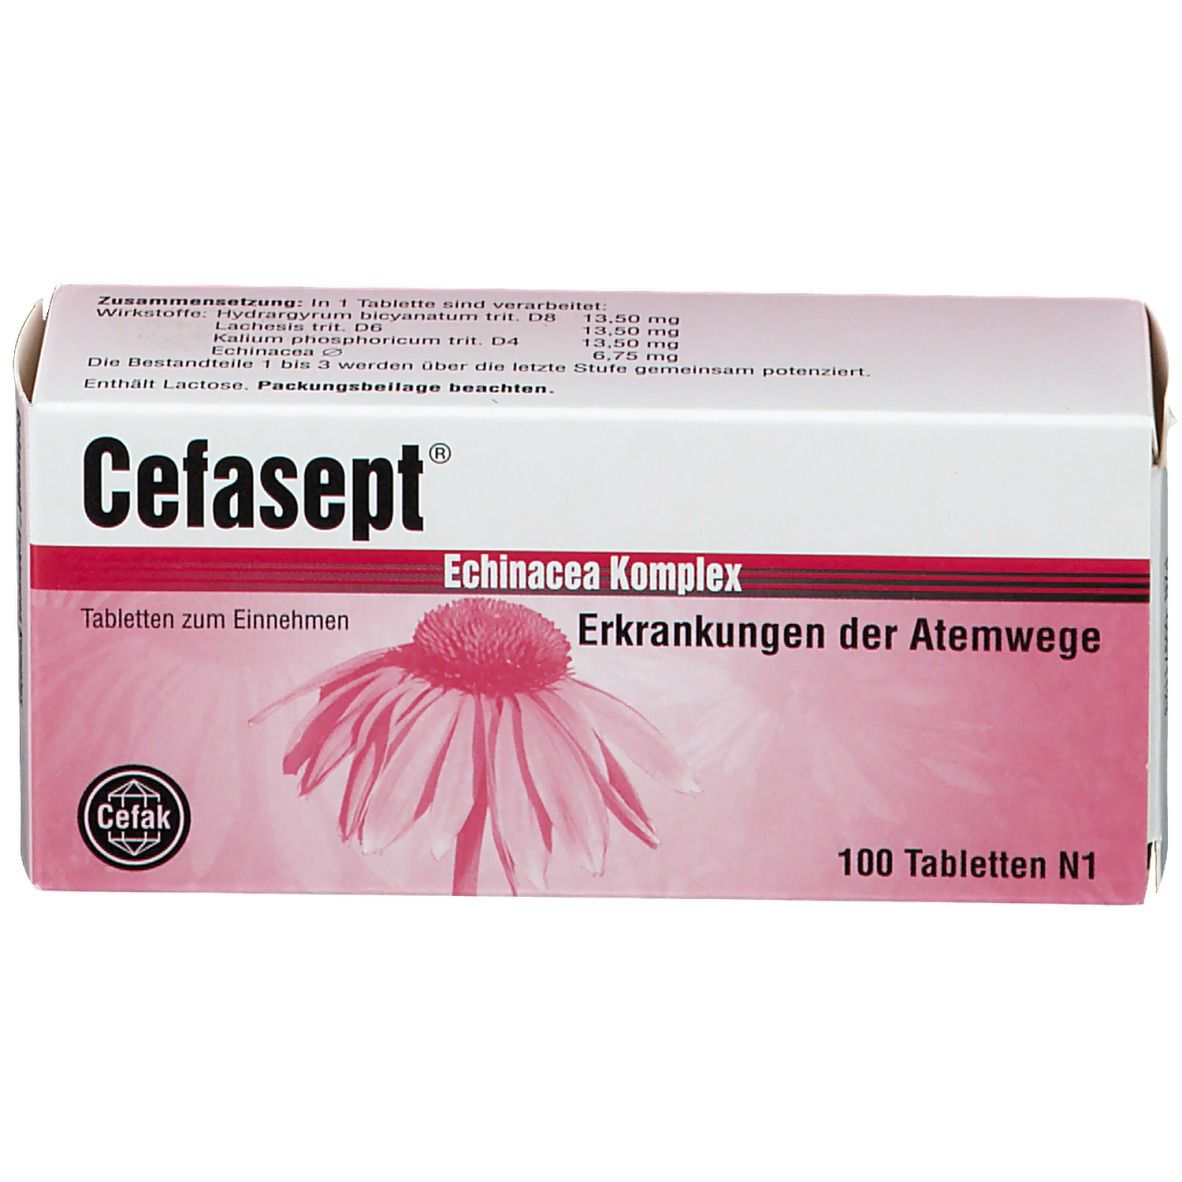 Cefasept® Echinacea Komplex Tabletten